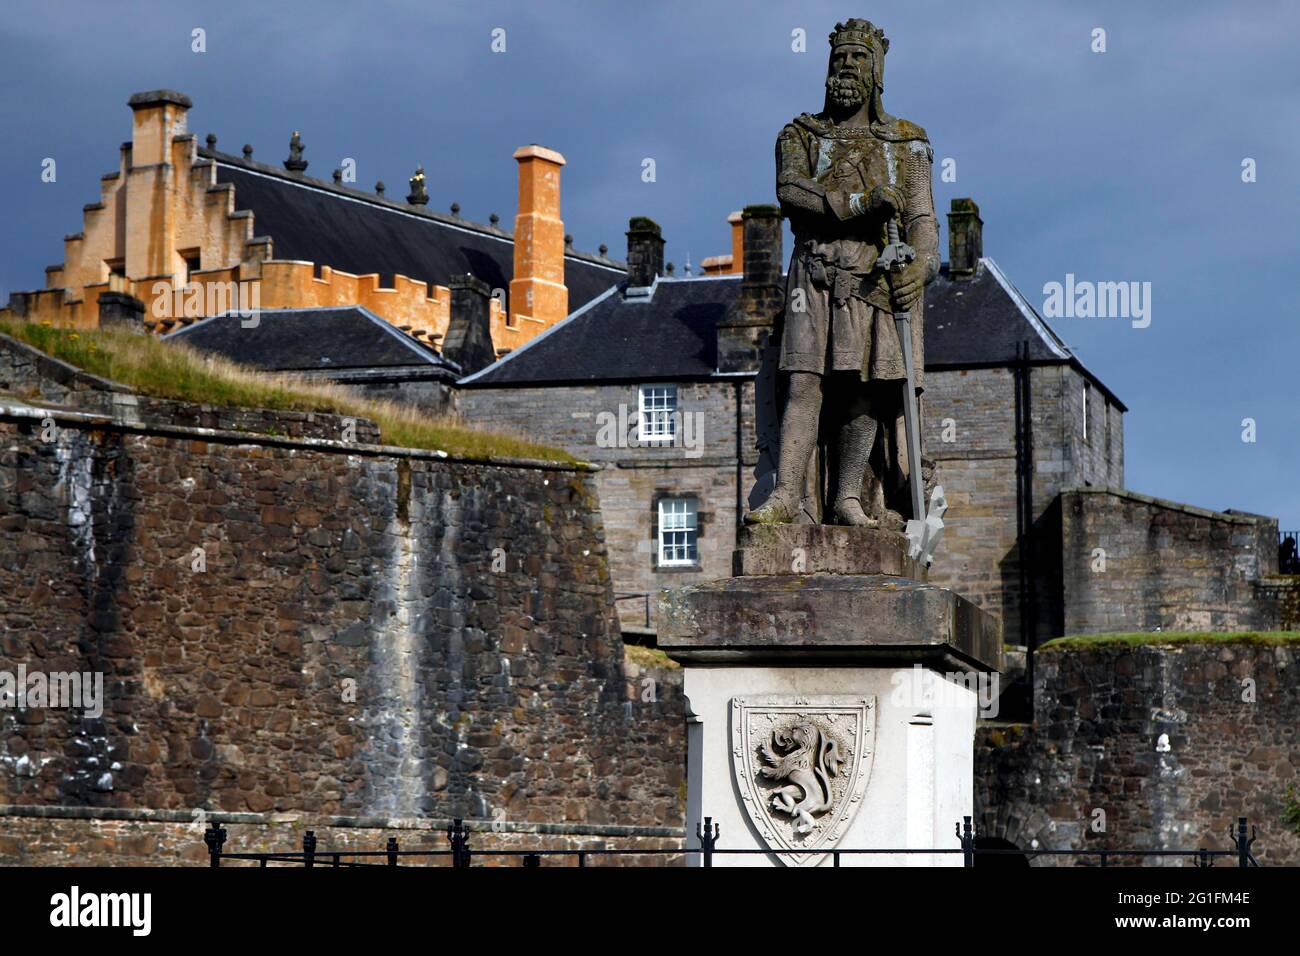 Robert The Bruce, Robert I, King of Scotland, statue, monument, Stirling Castle, castle, castle hill, Battle of Bannockburn, Stirling, Stirling and Stock Photo